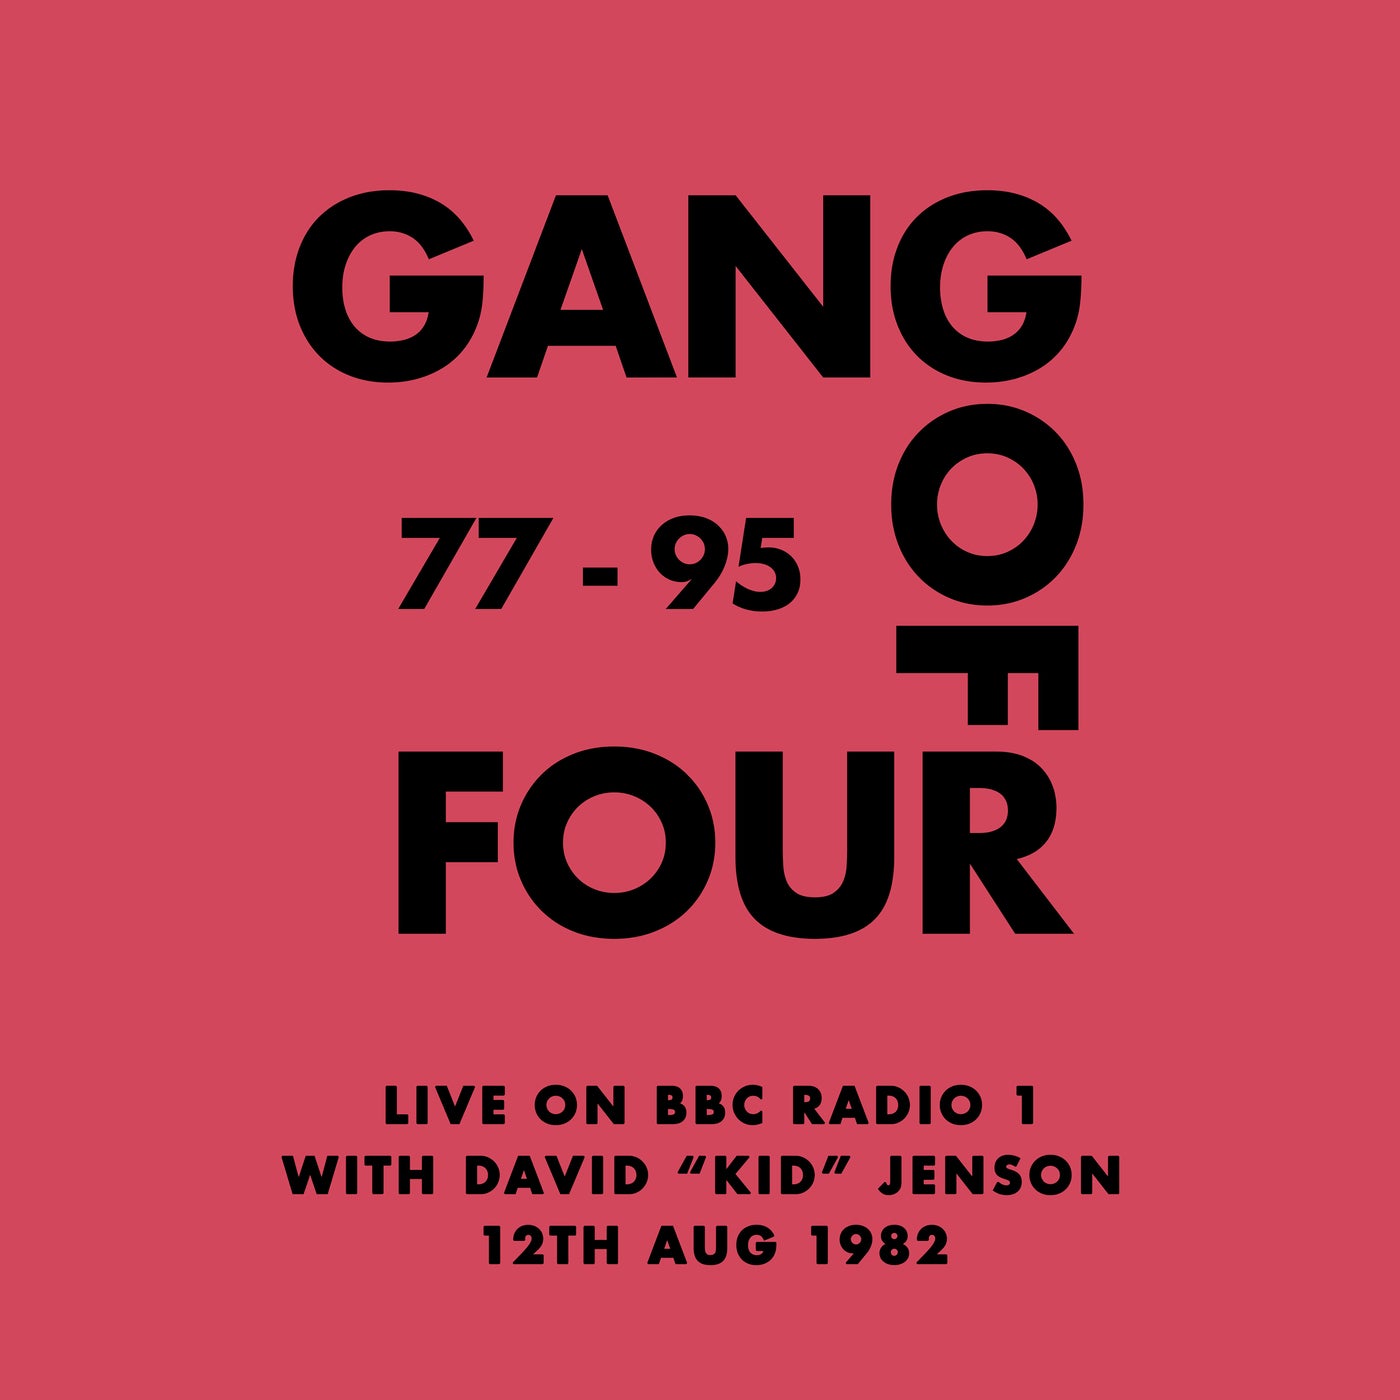 Live on BBC Radio 1 with David "Kid" Jensen - 12th Aug 1982